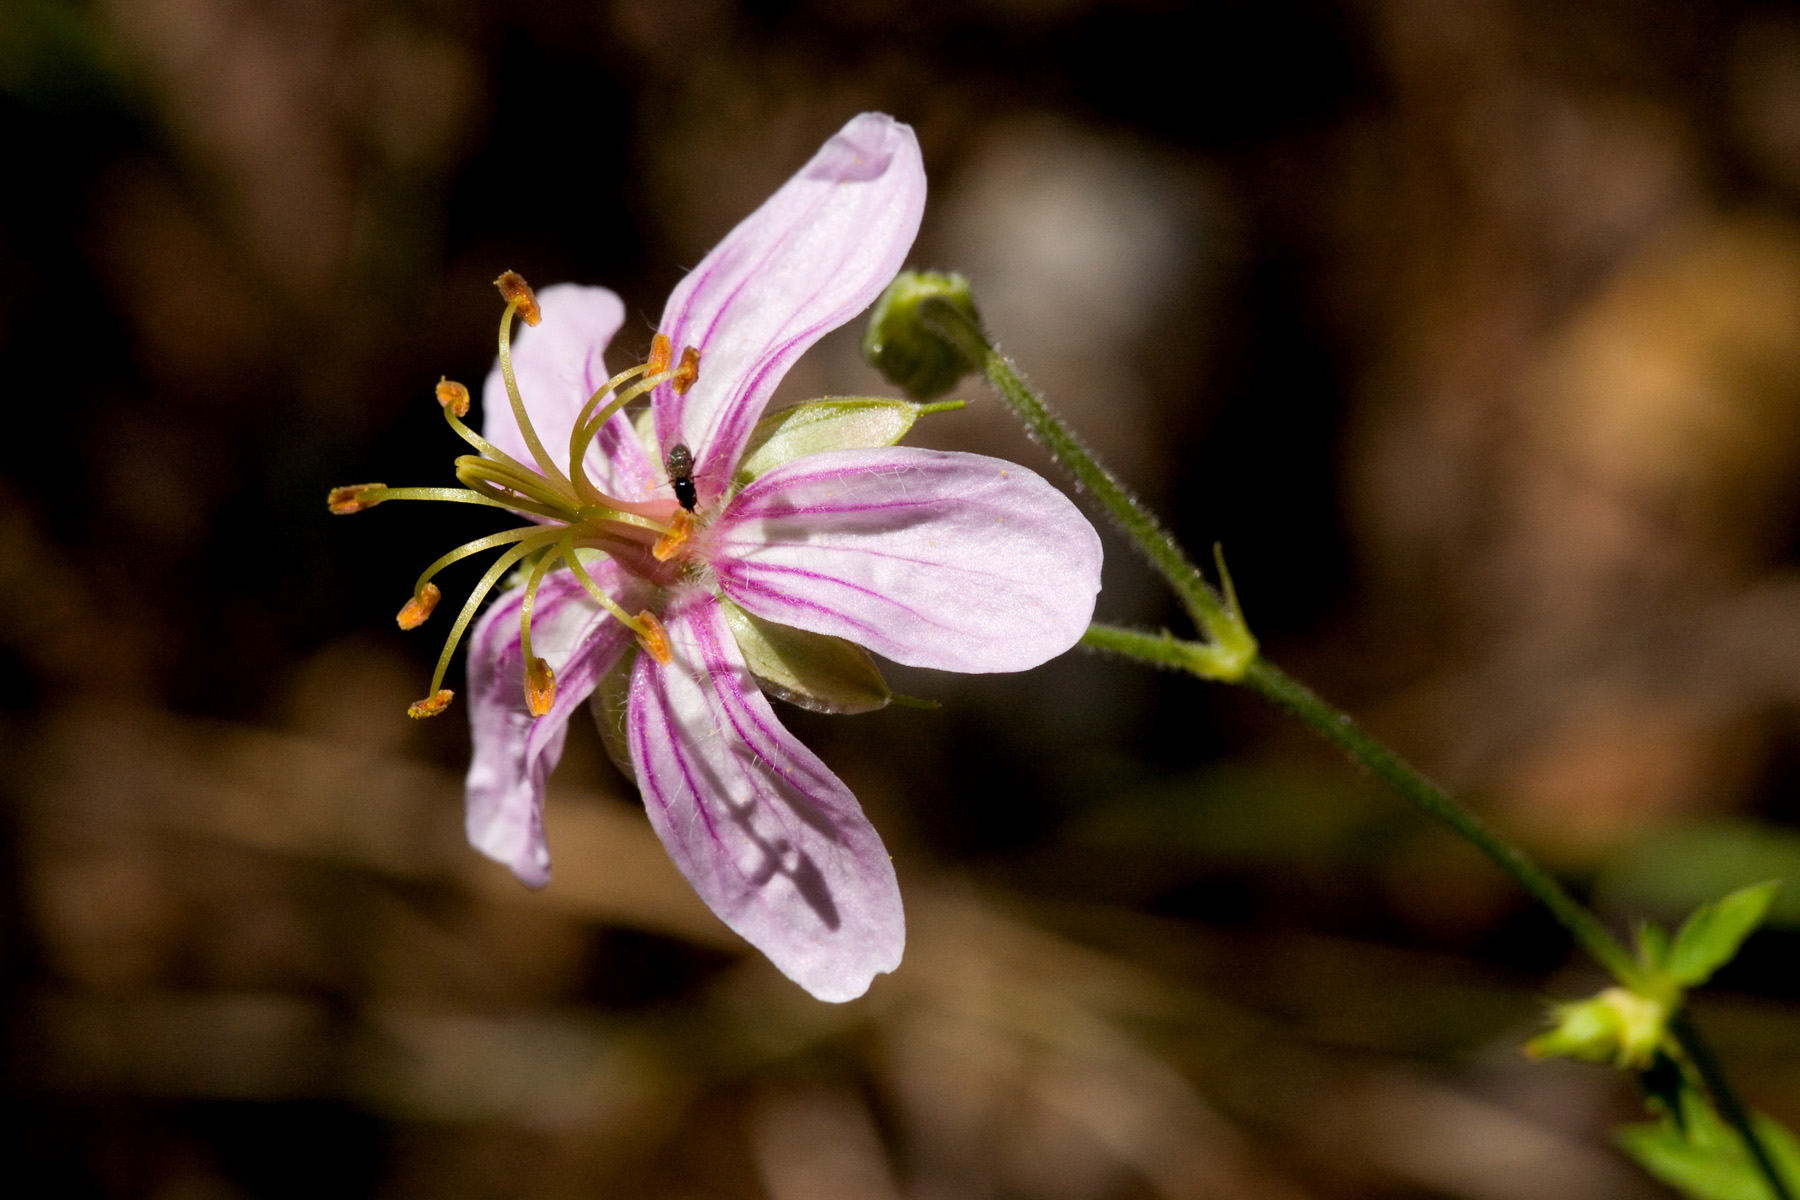 Light pink flower of Geranium caespitosum with five petals, characteristic of geraniums